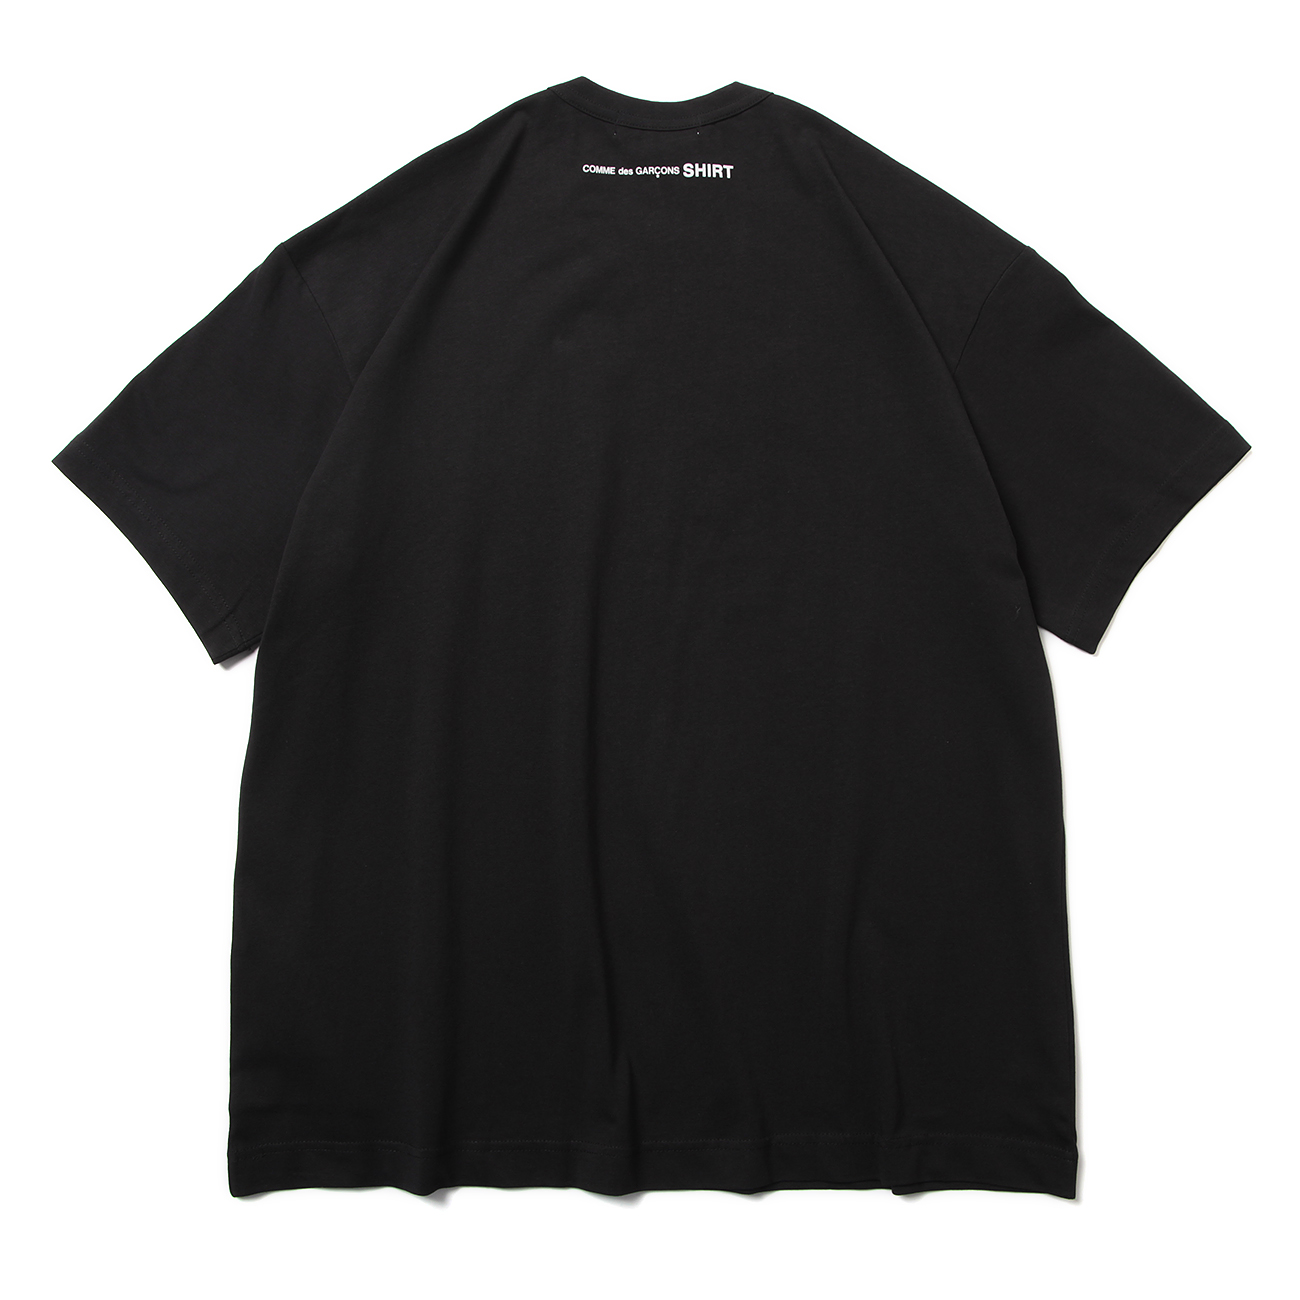 cotton jersey plain 165gr with CDG SHIRT logo back - Black